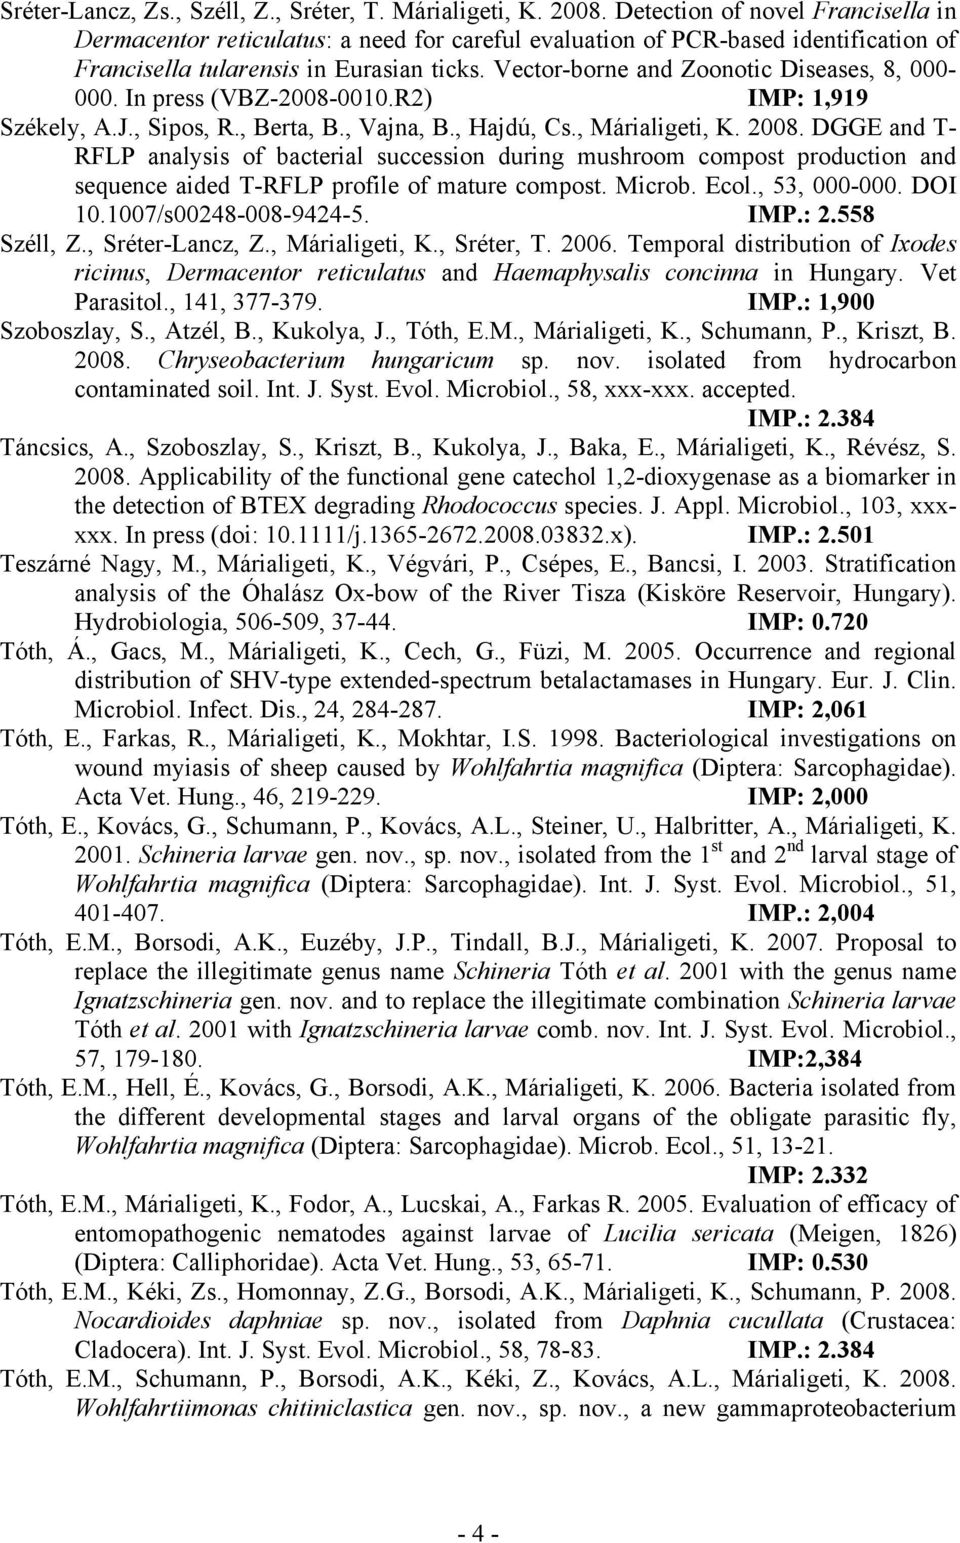 Vector-borne and Zoonotic Diseases, 8, 000-000. In press (VBZ-2008-0010.R2) IMP: 1,919 Székely, A.J., Sipos, R., Berta, B., Vajna, B., Hajdú, Cs., Márialigeti, K. 2008.